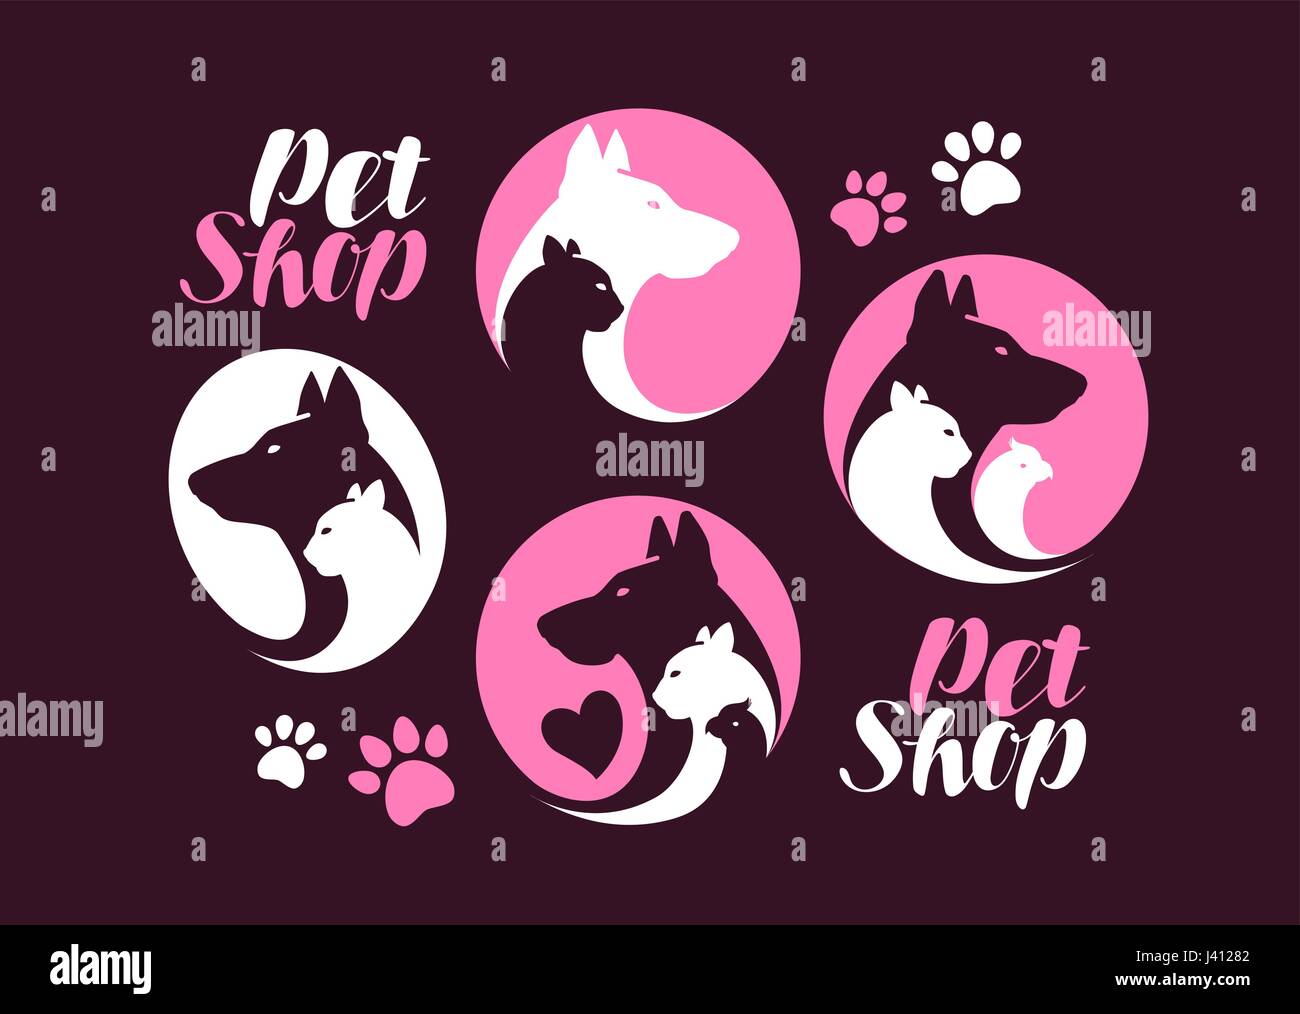 Pet shop, label set. Dog, cat, parrot, animal icon or logo. Vector illustration Stock Vector